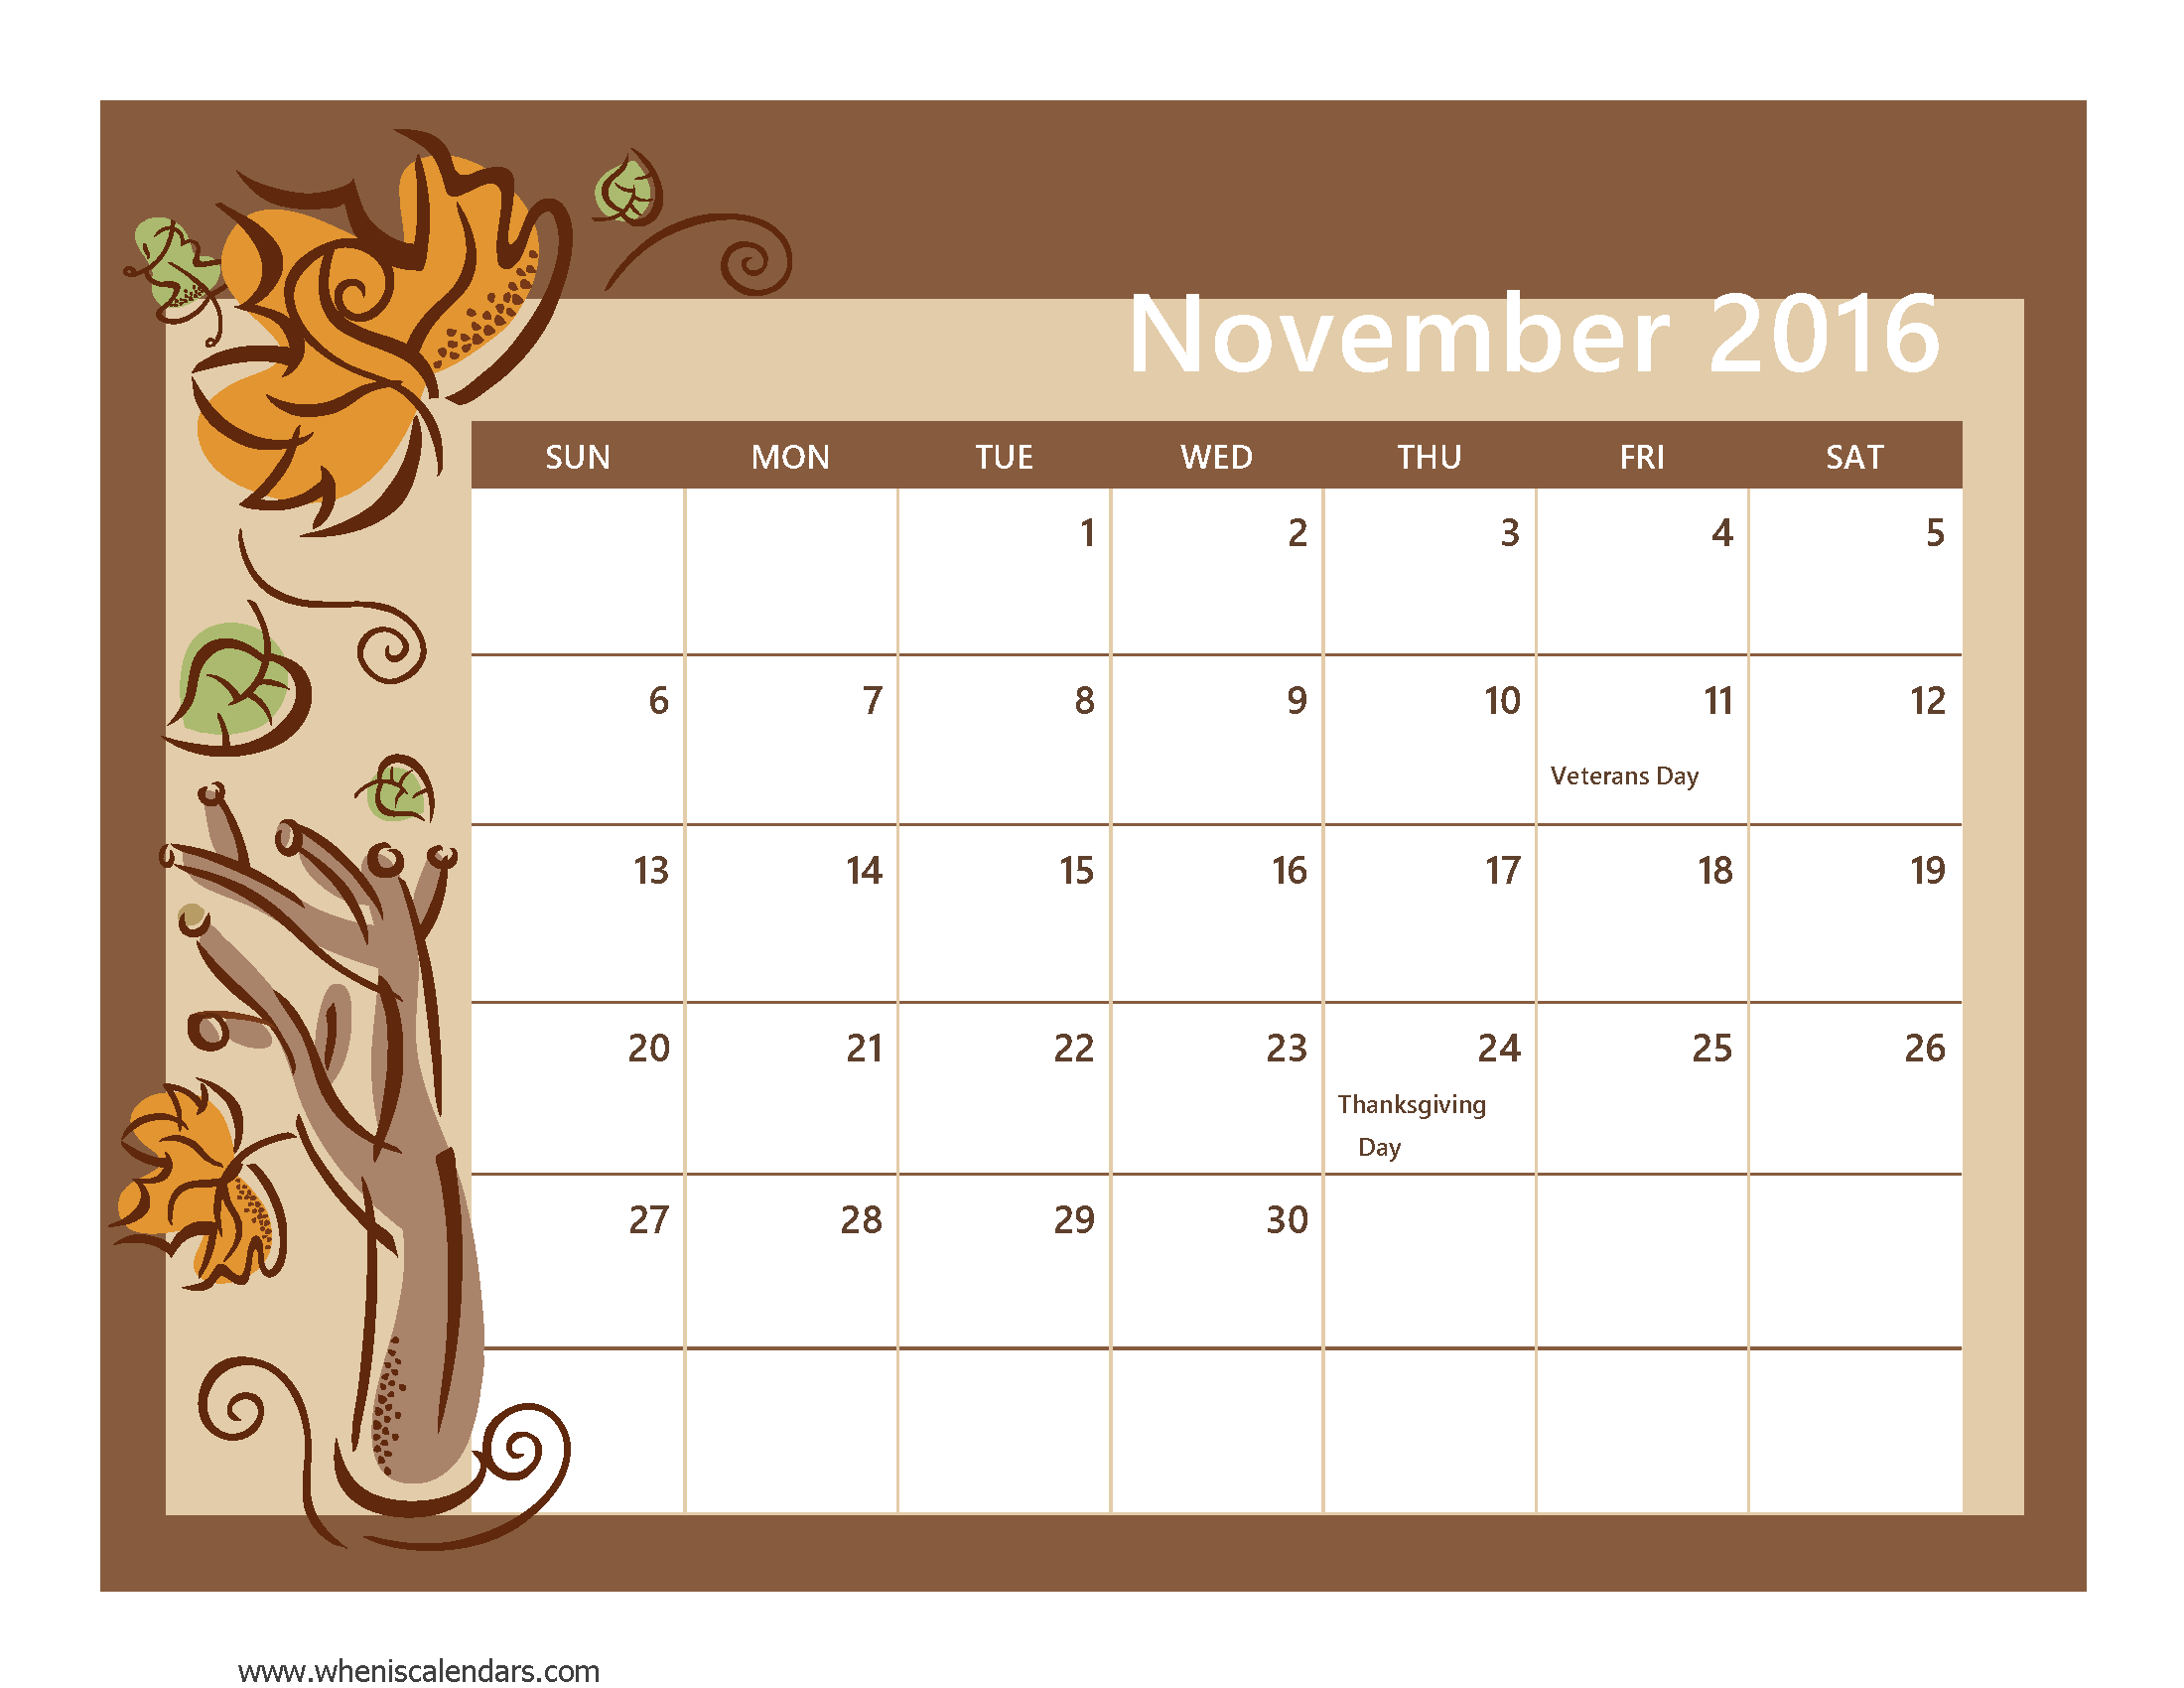 November 2016 Calendar Printable With Holidays | 2017 calendar 